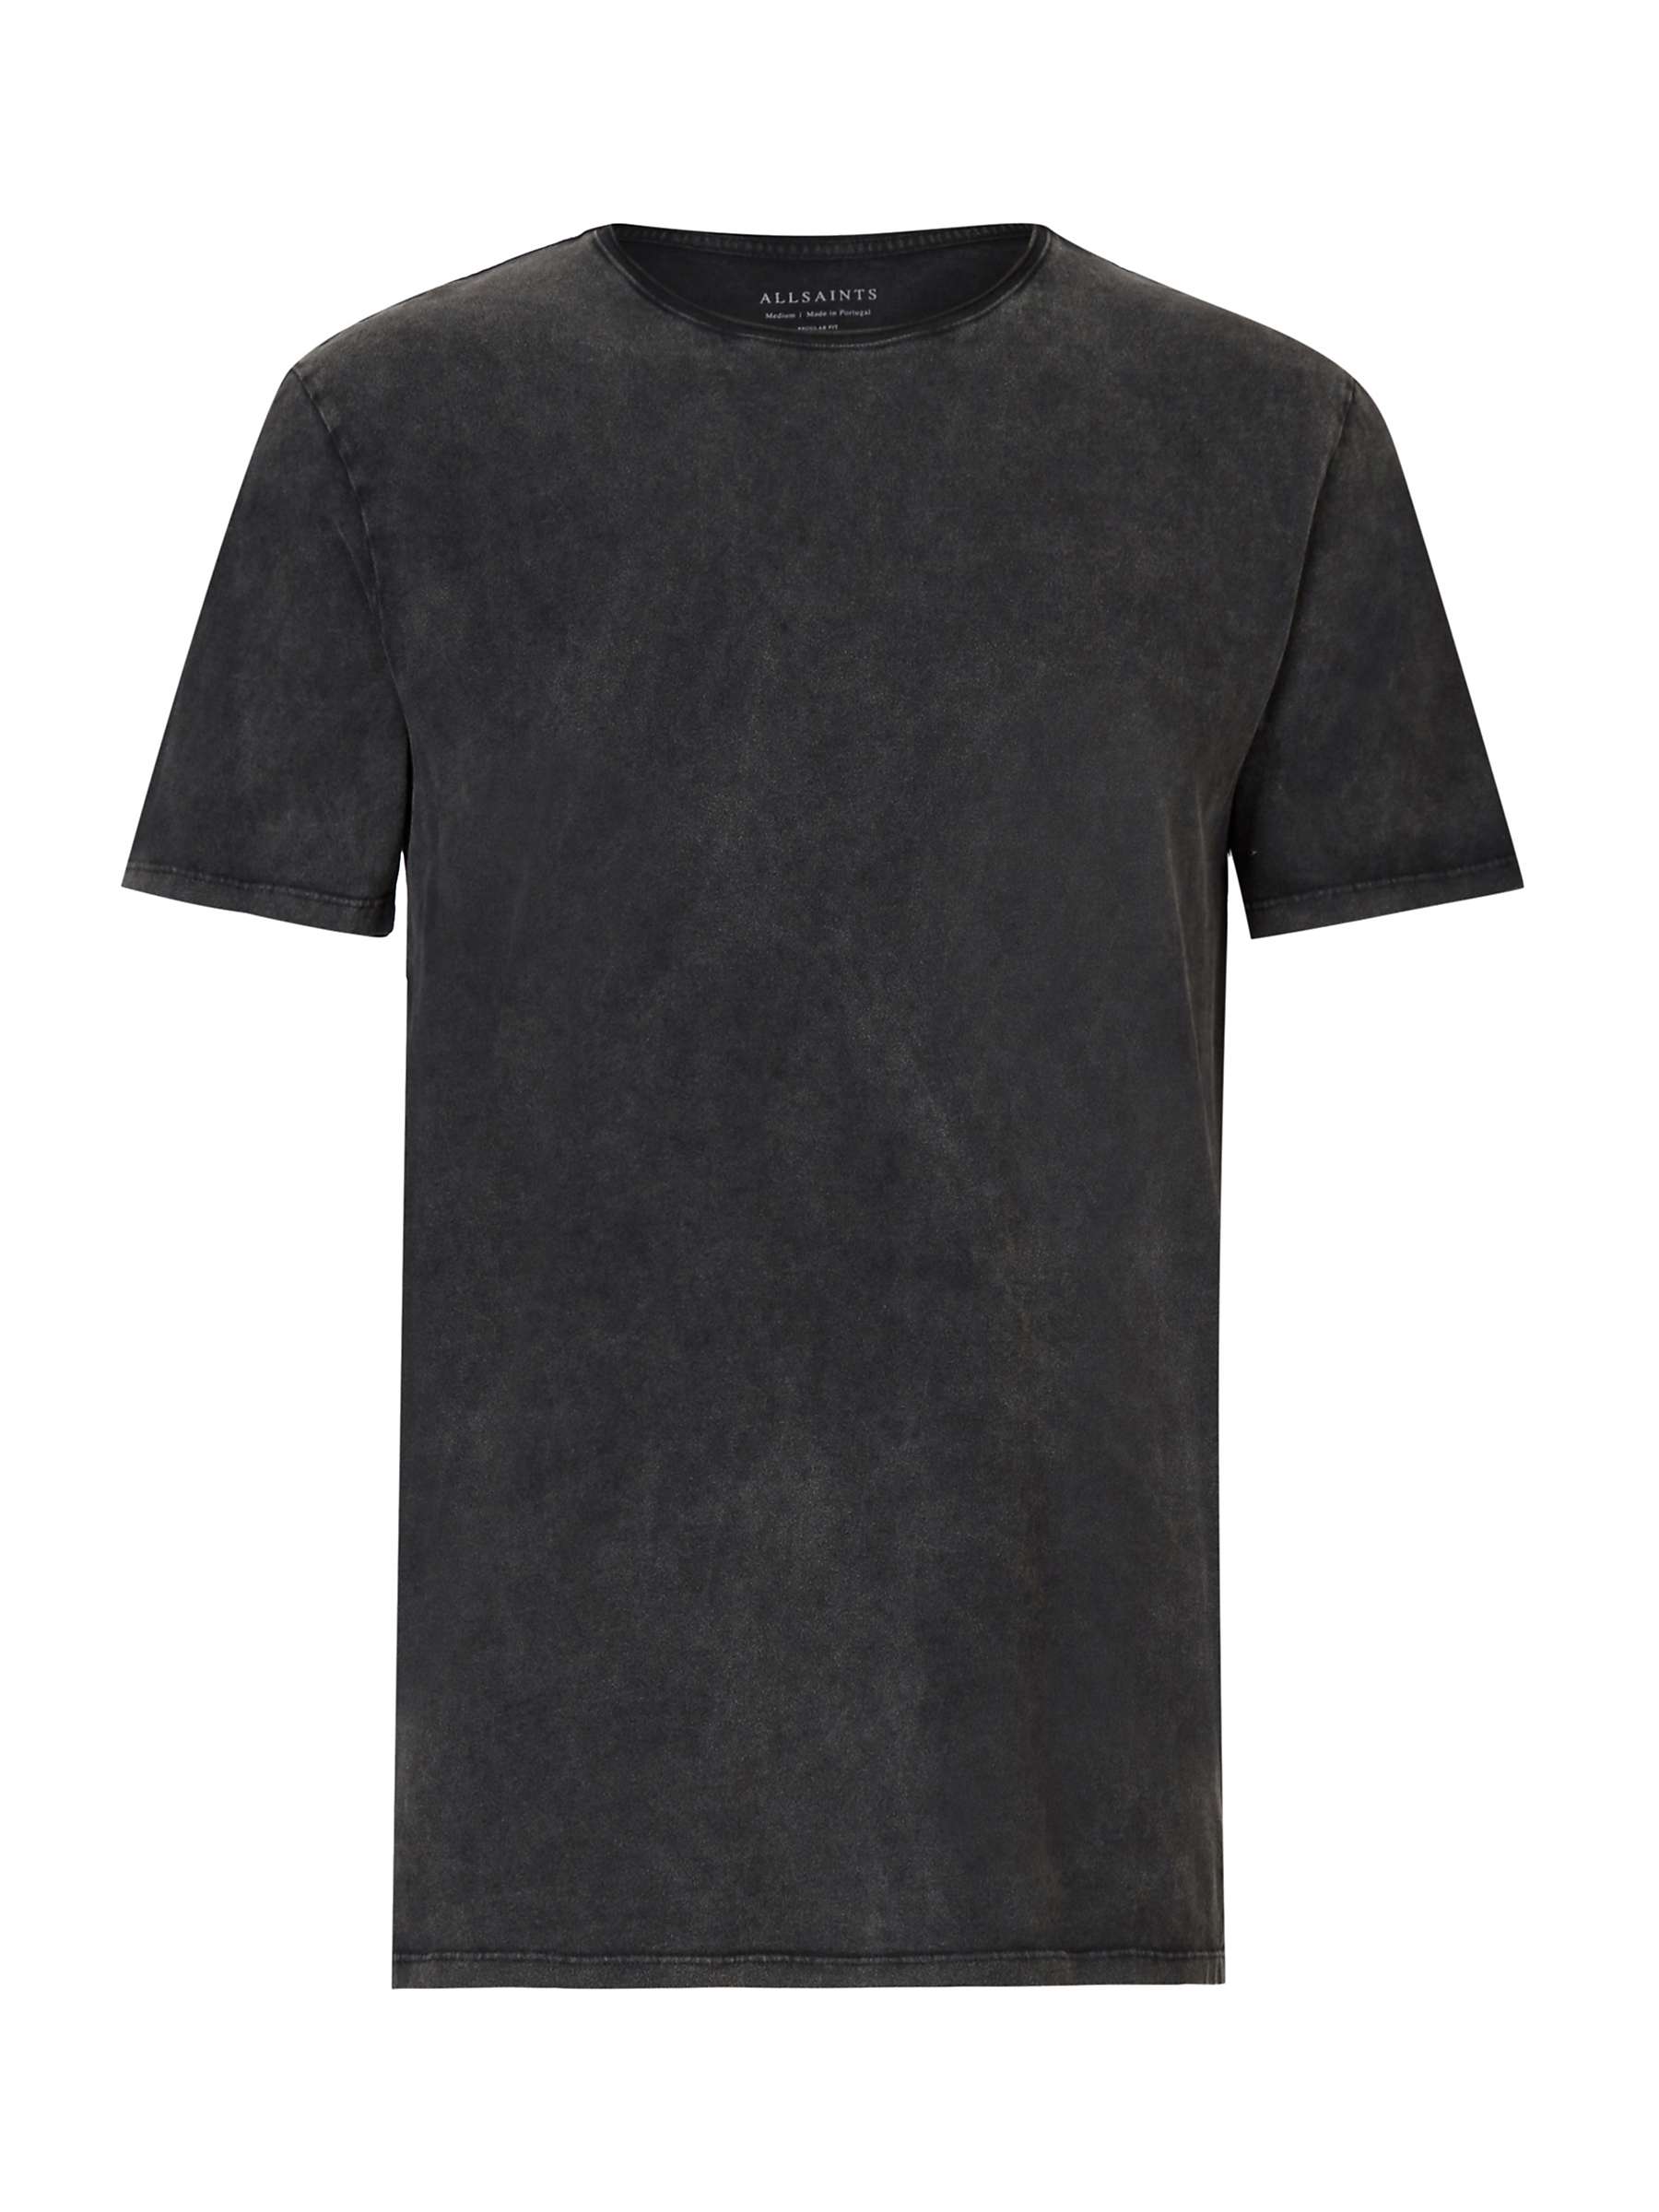 Buy AllSaints Bodega Stretch Cotton Crew Neck T-Shirt Online at johnlewis.com